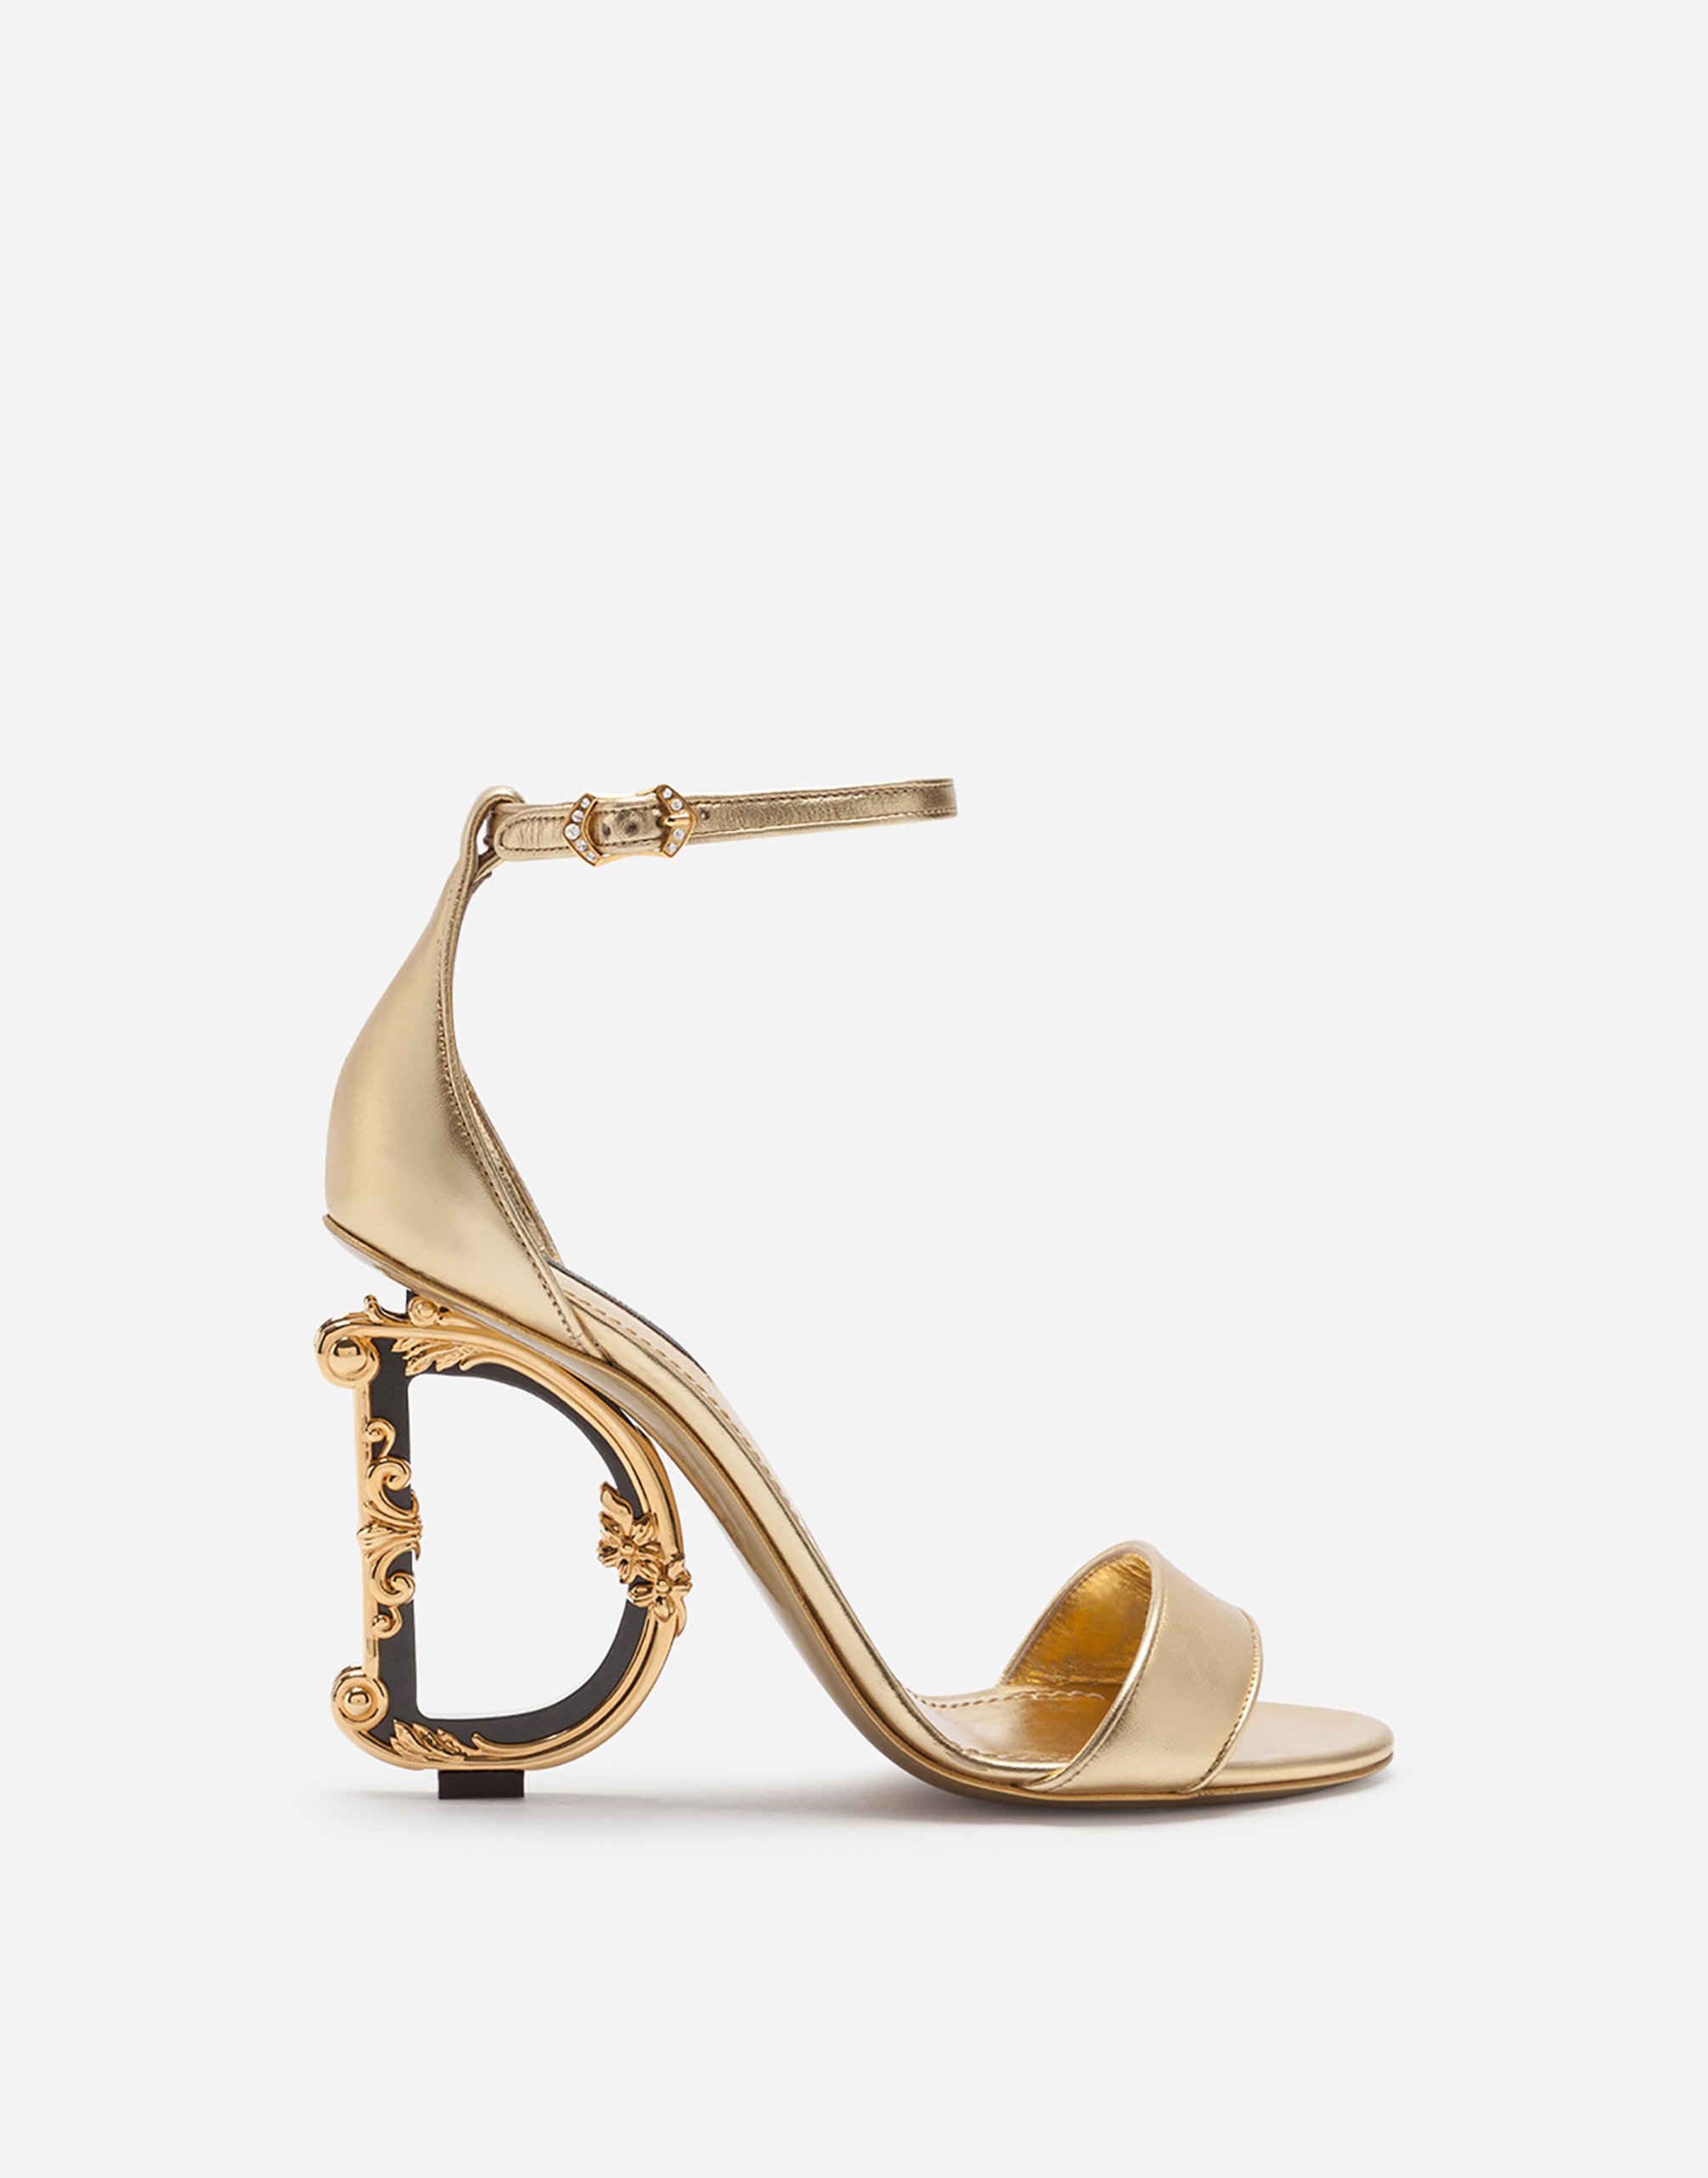 Nappa mordore sandals with baroque DG heel in Gold